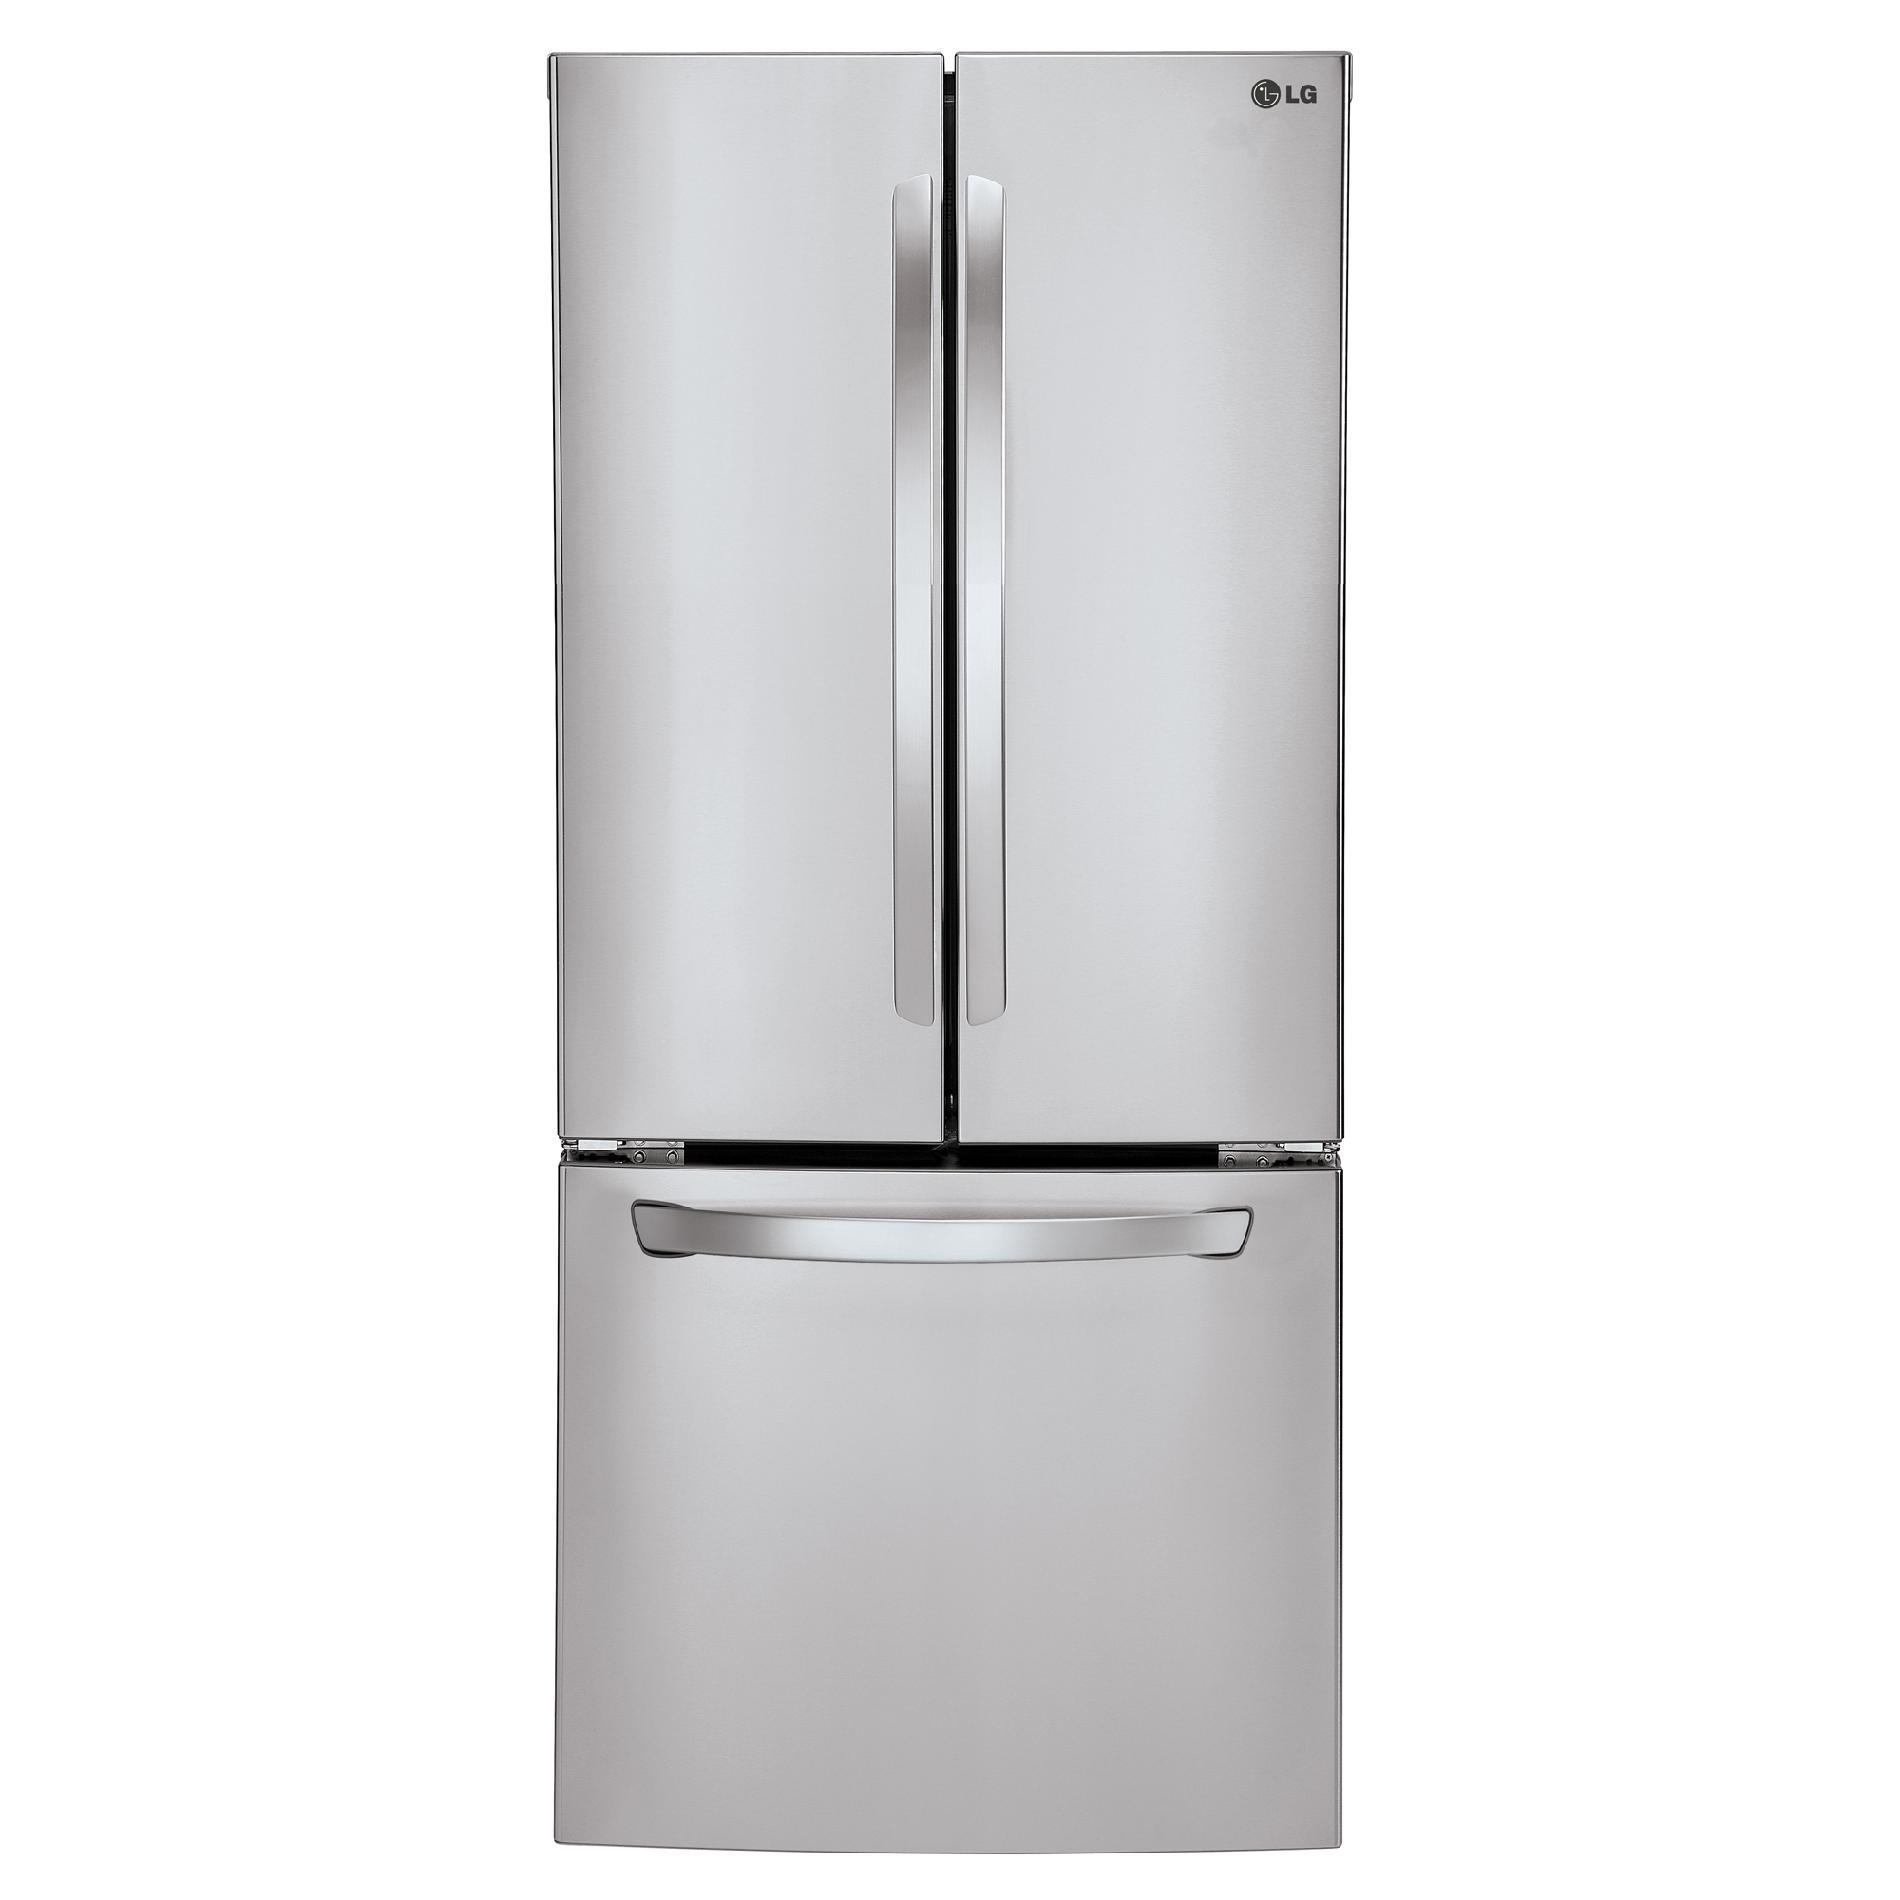 LG LFC22770ST 21.8 cu. ft. French Door BottomFreezer Refrigerator